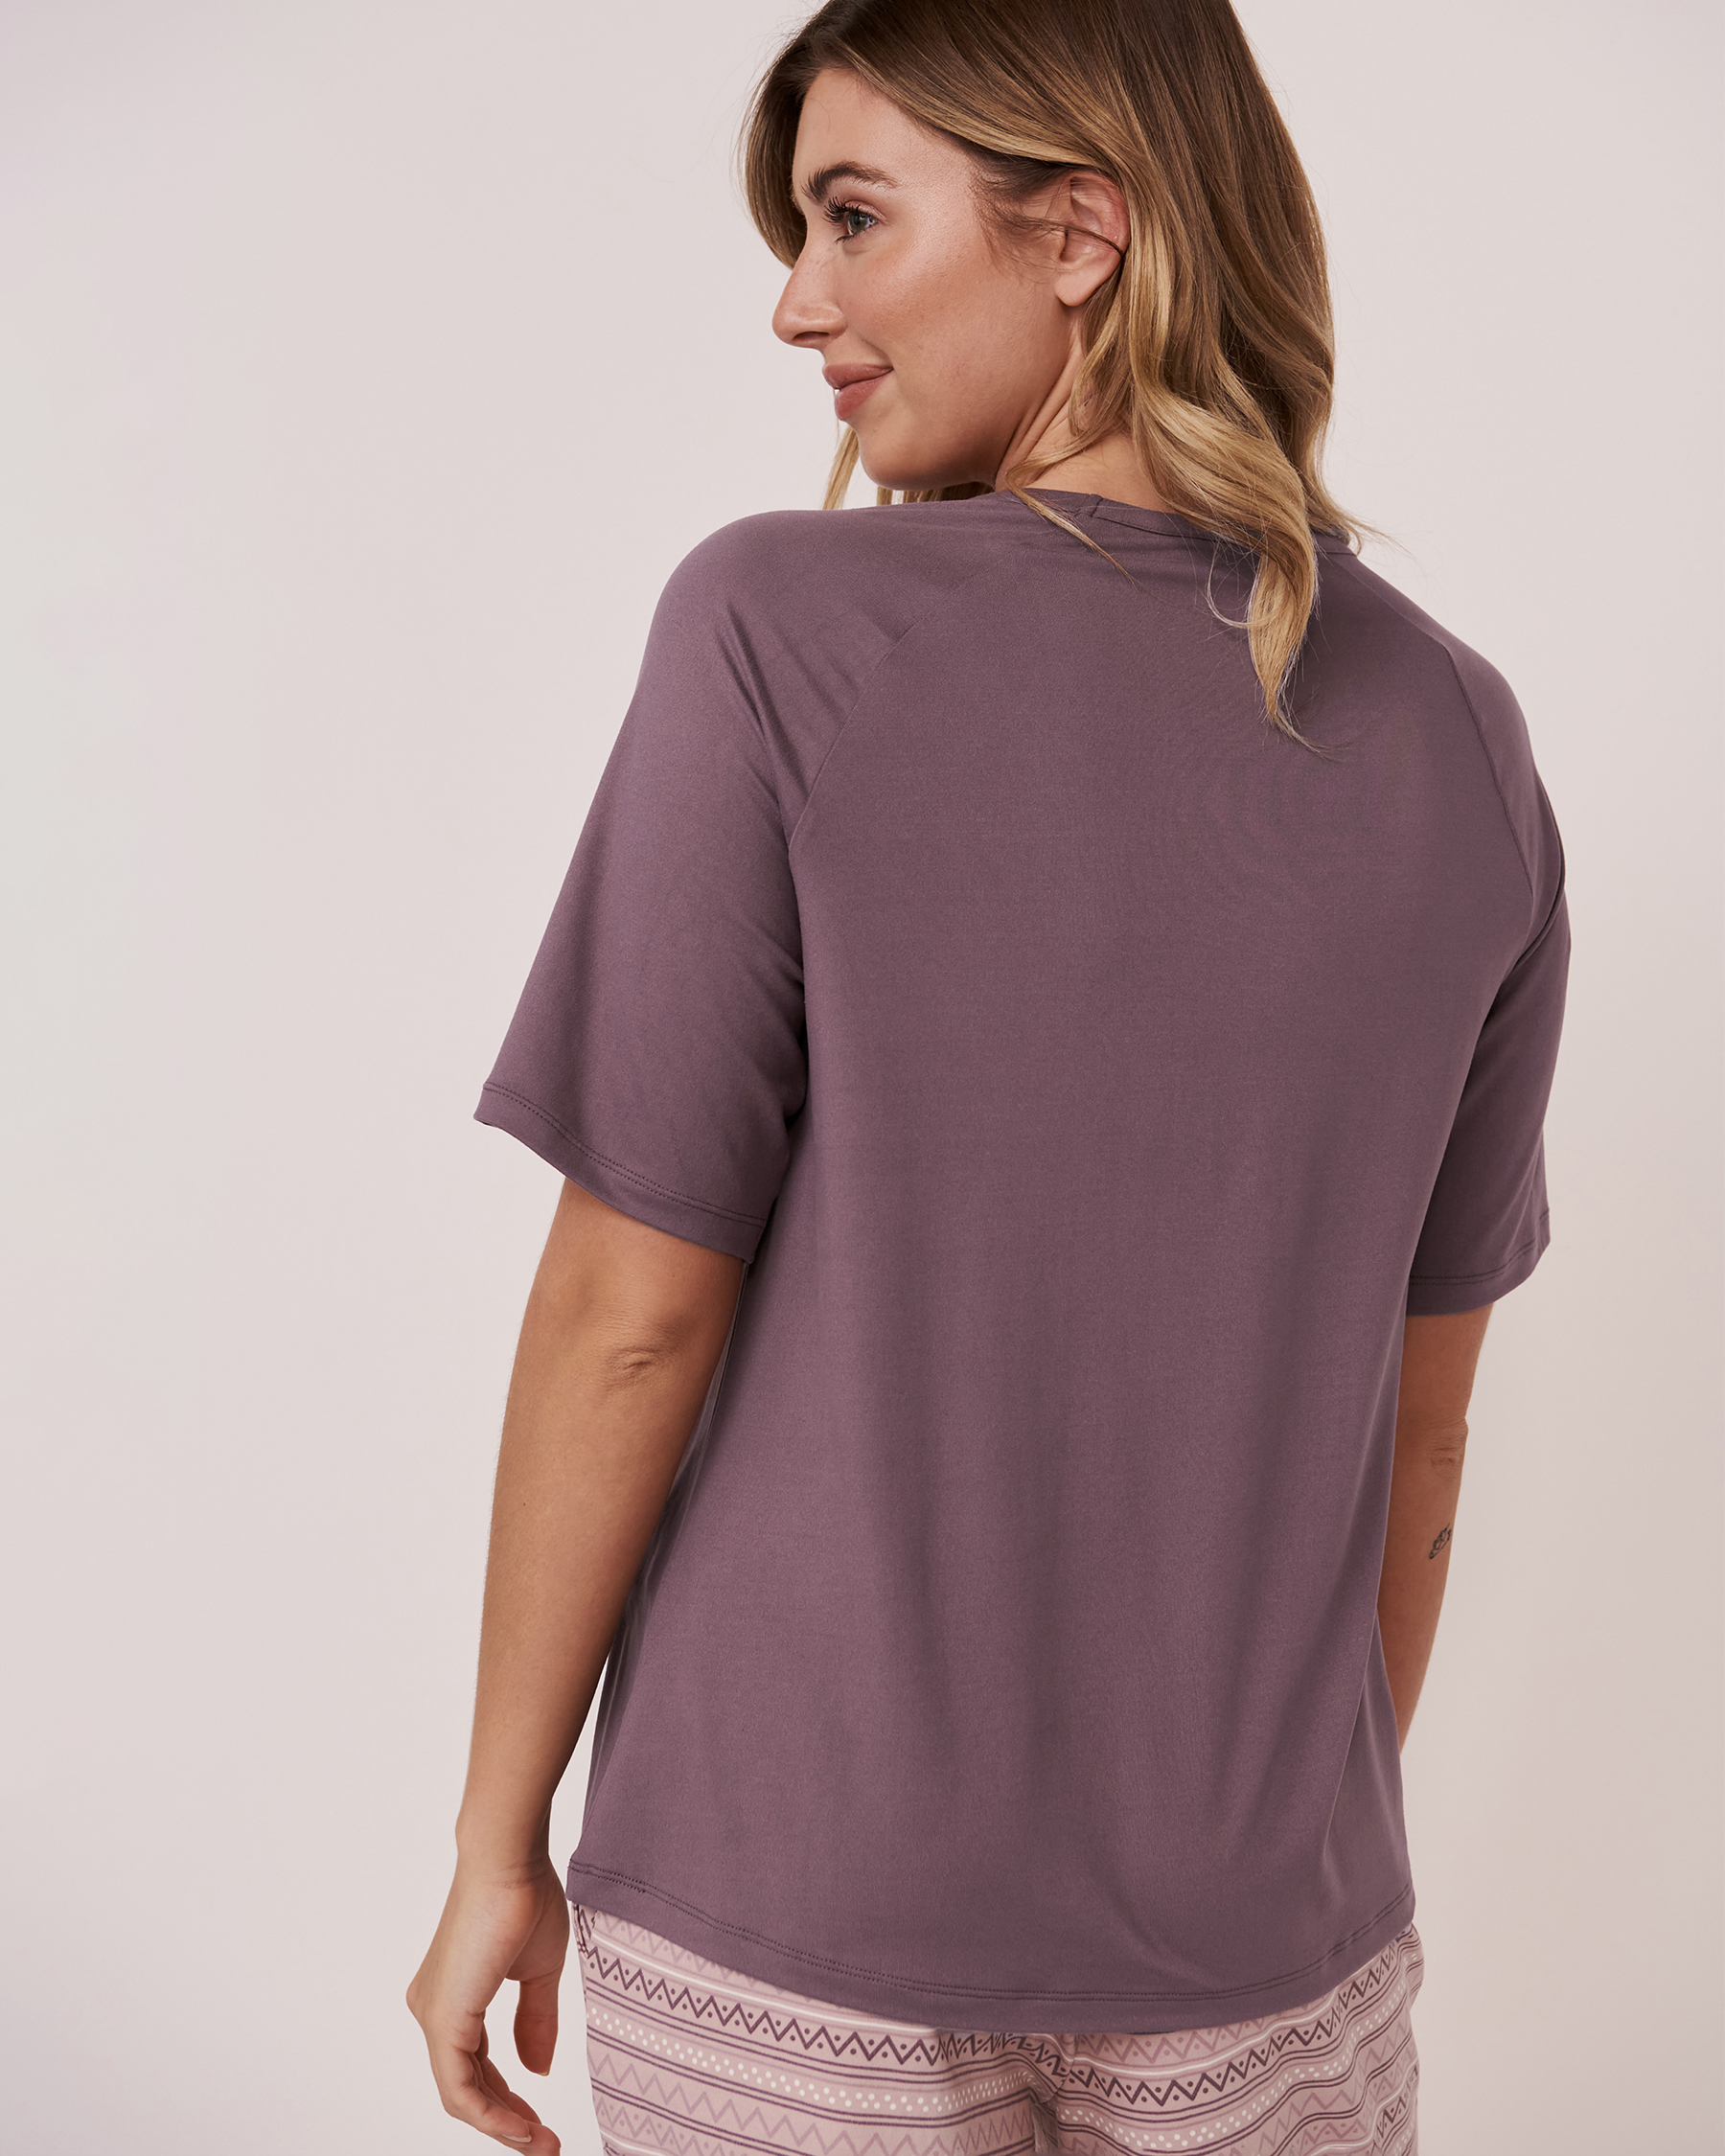 LA VIE EN ROSE Super Soft Raglan Sleeve Shirt Dark plum 40100326 - View3